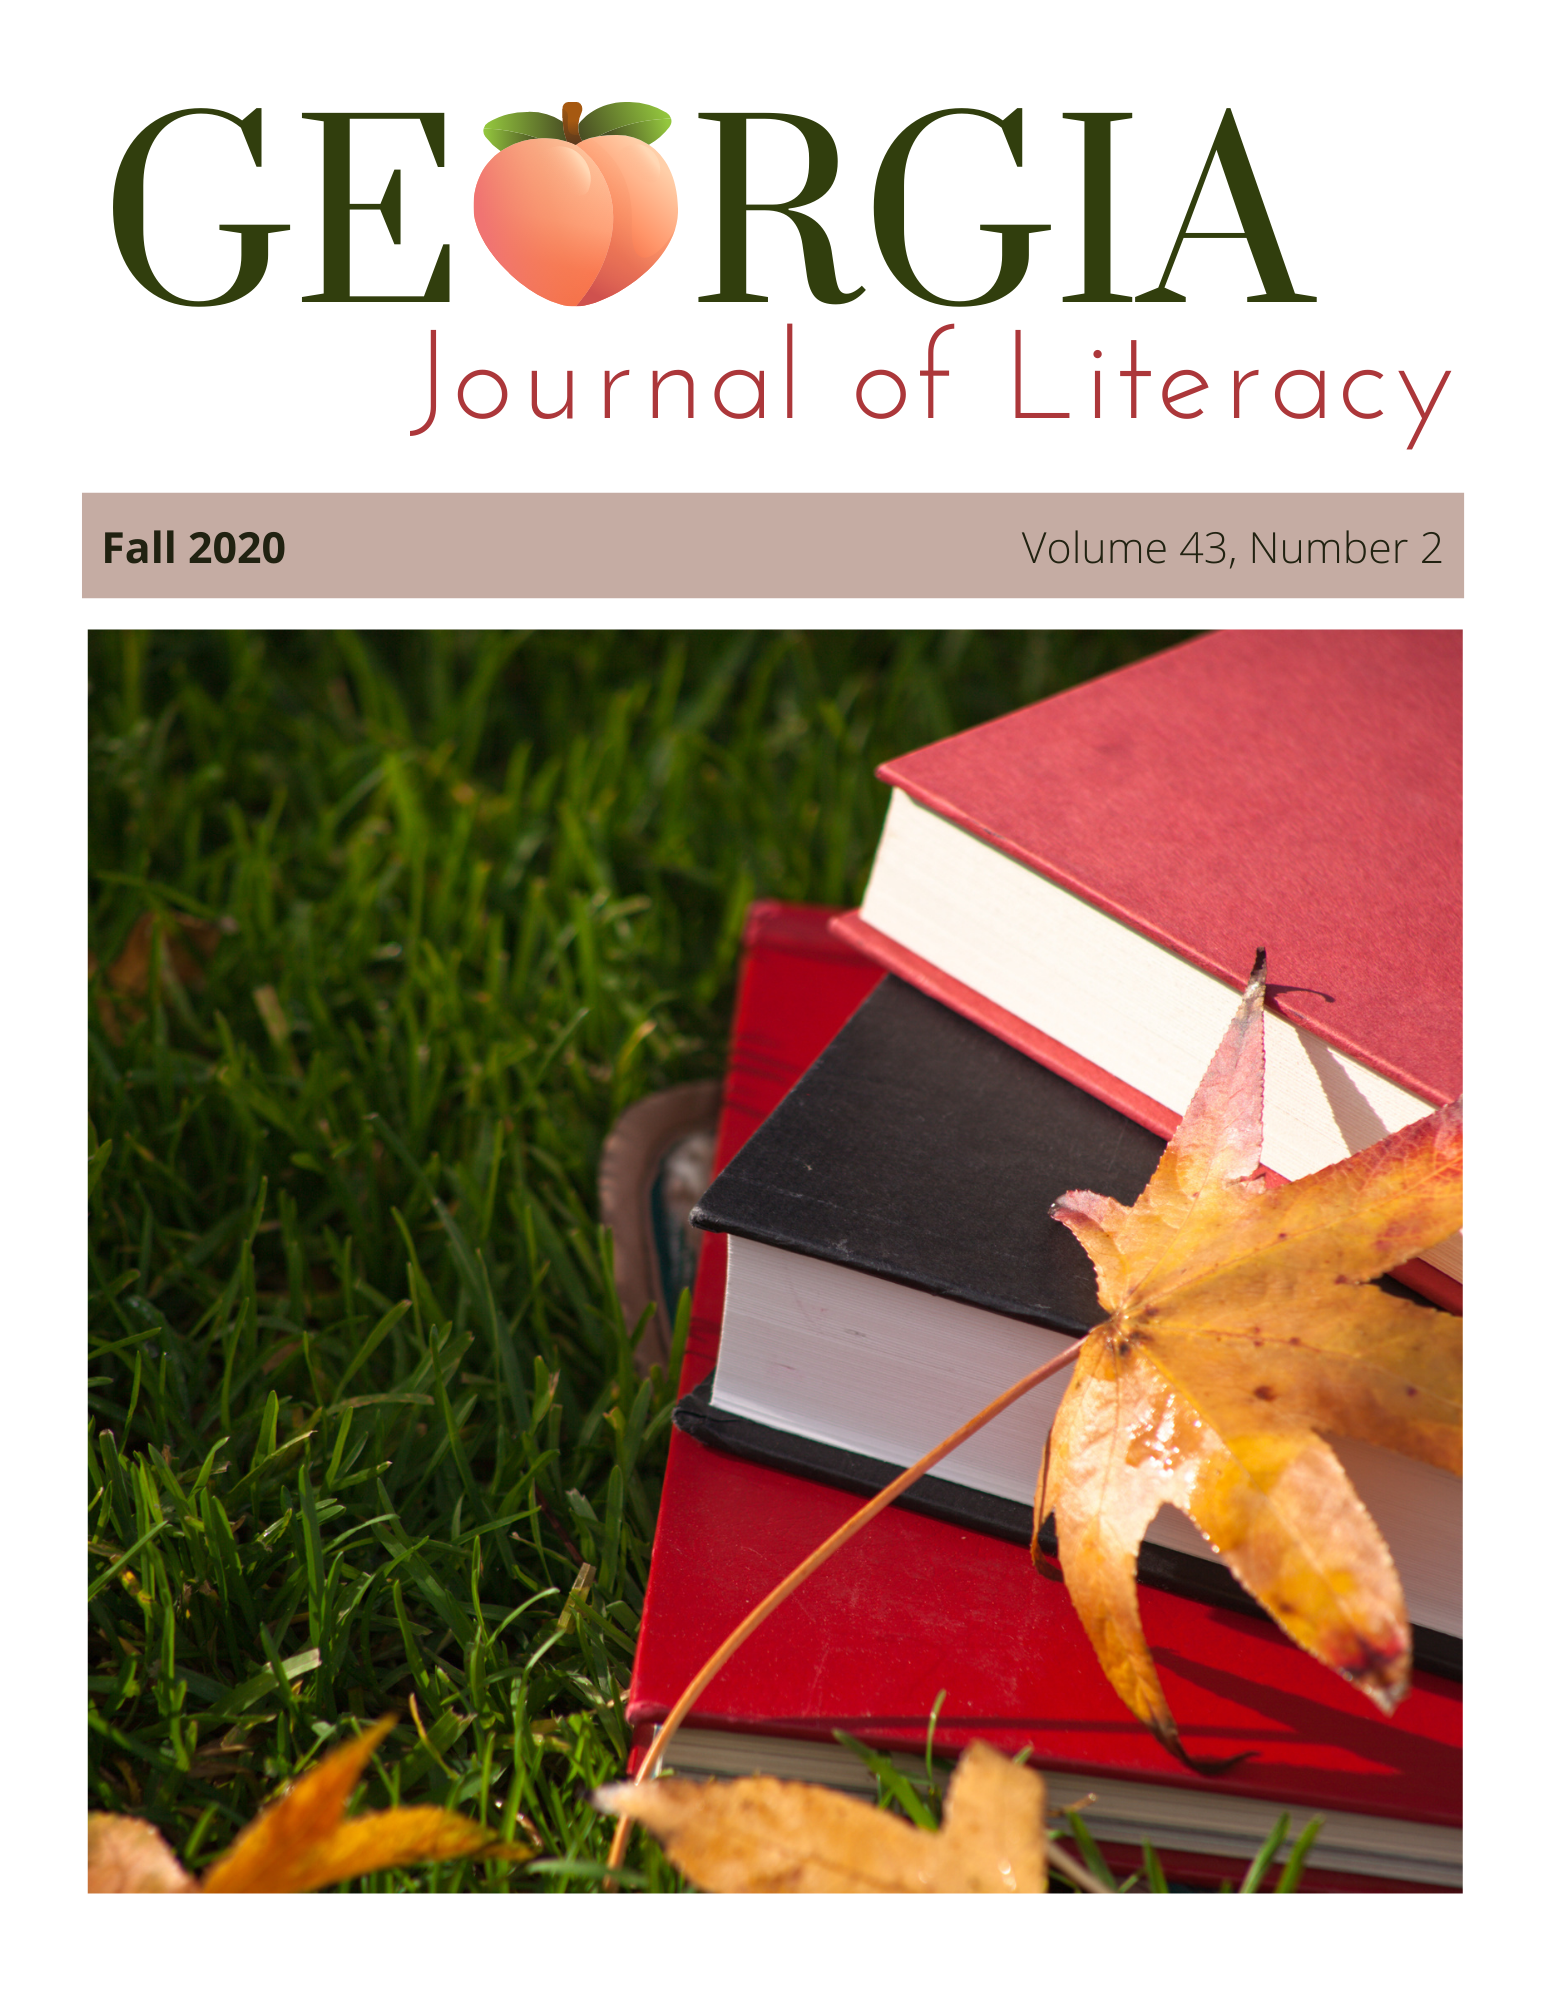 Georgia Journal of Literacy (Fall 2020)